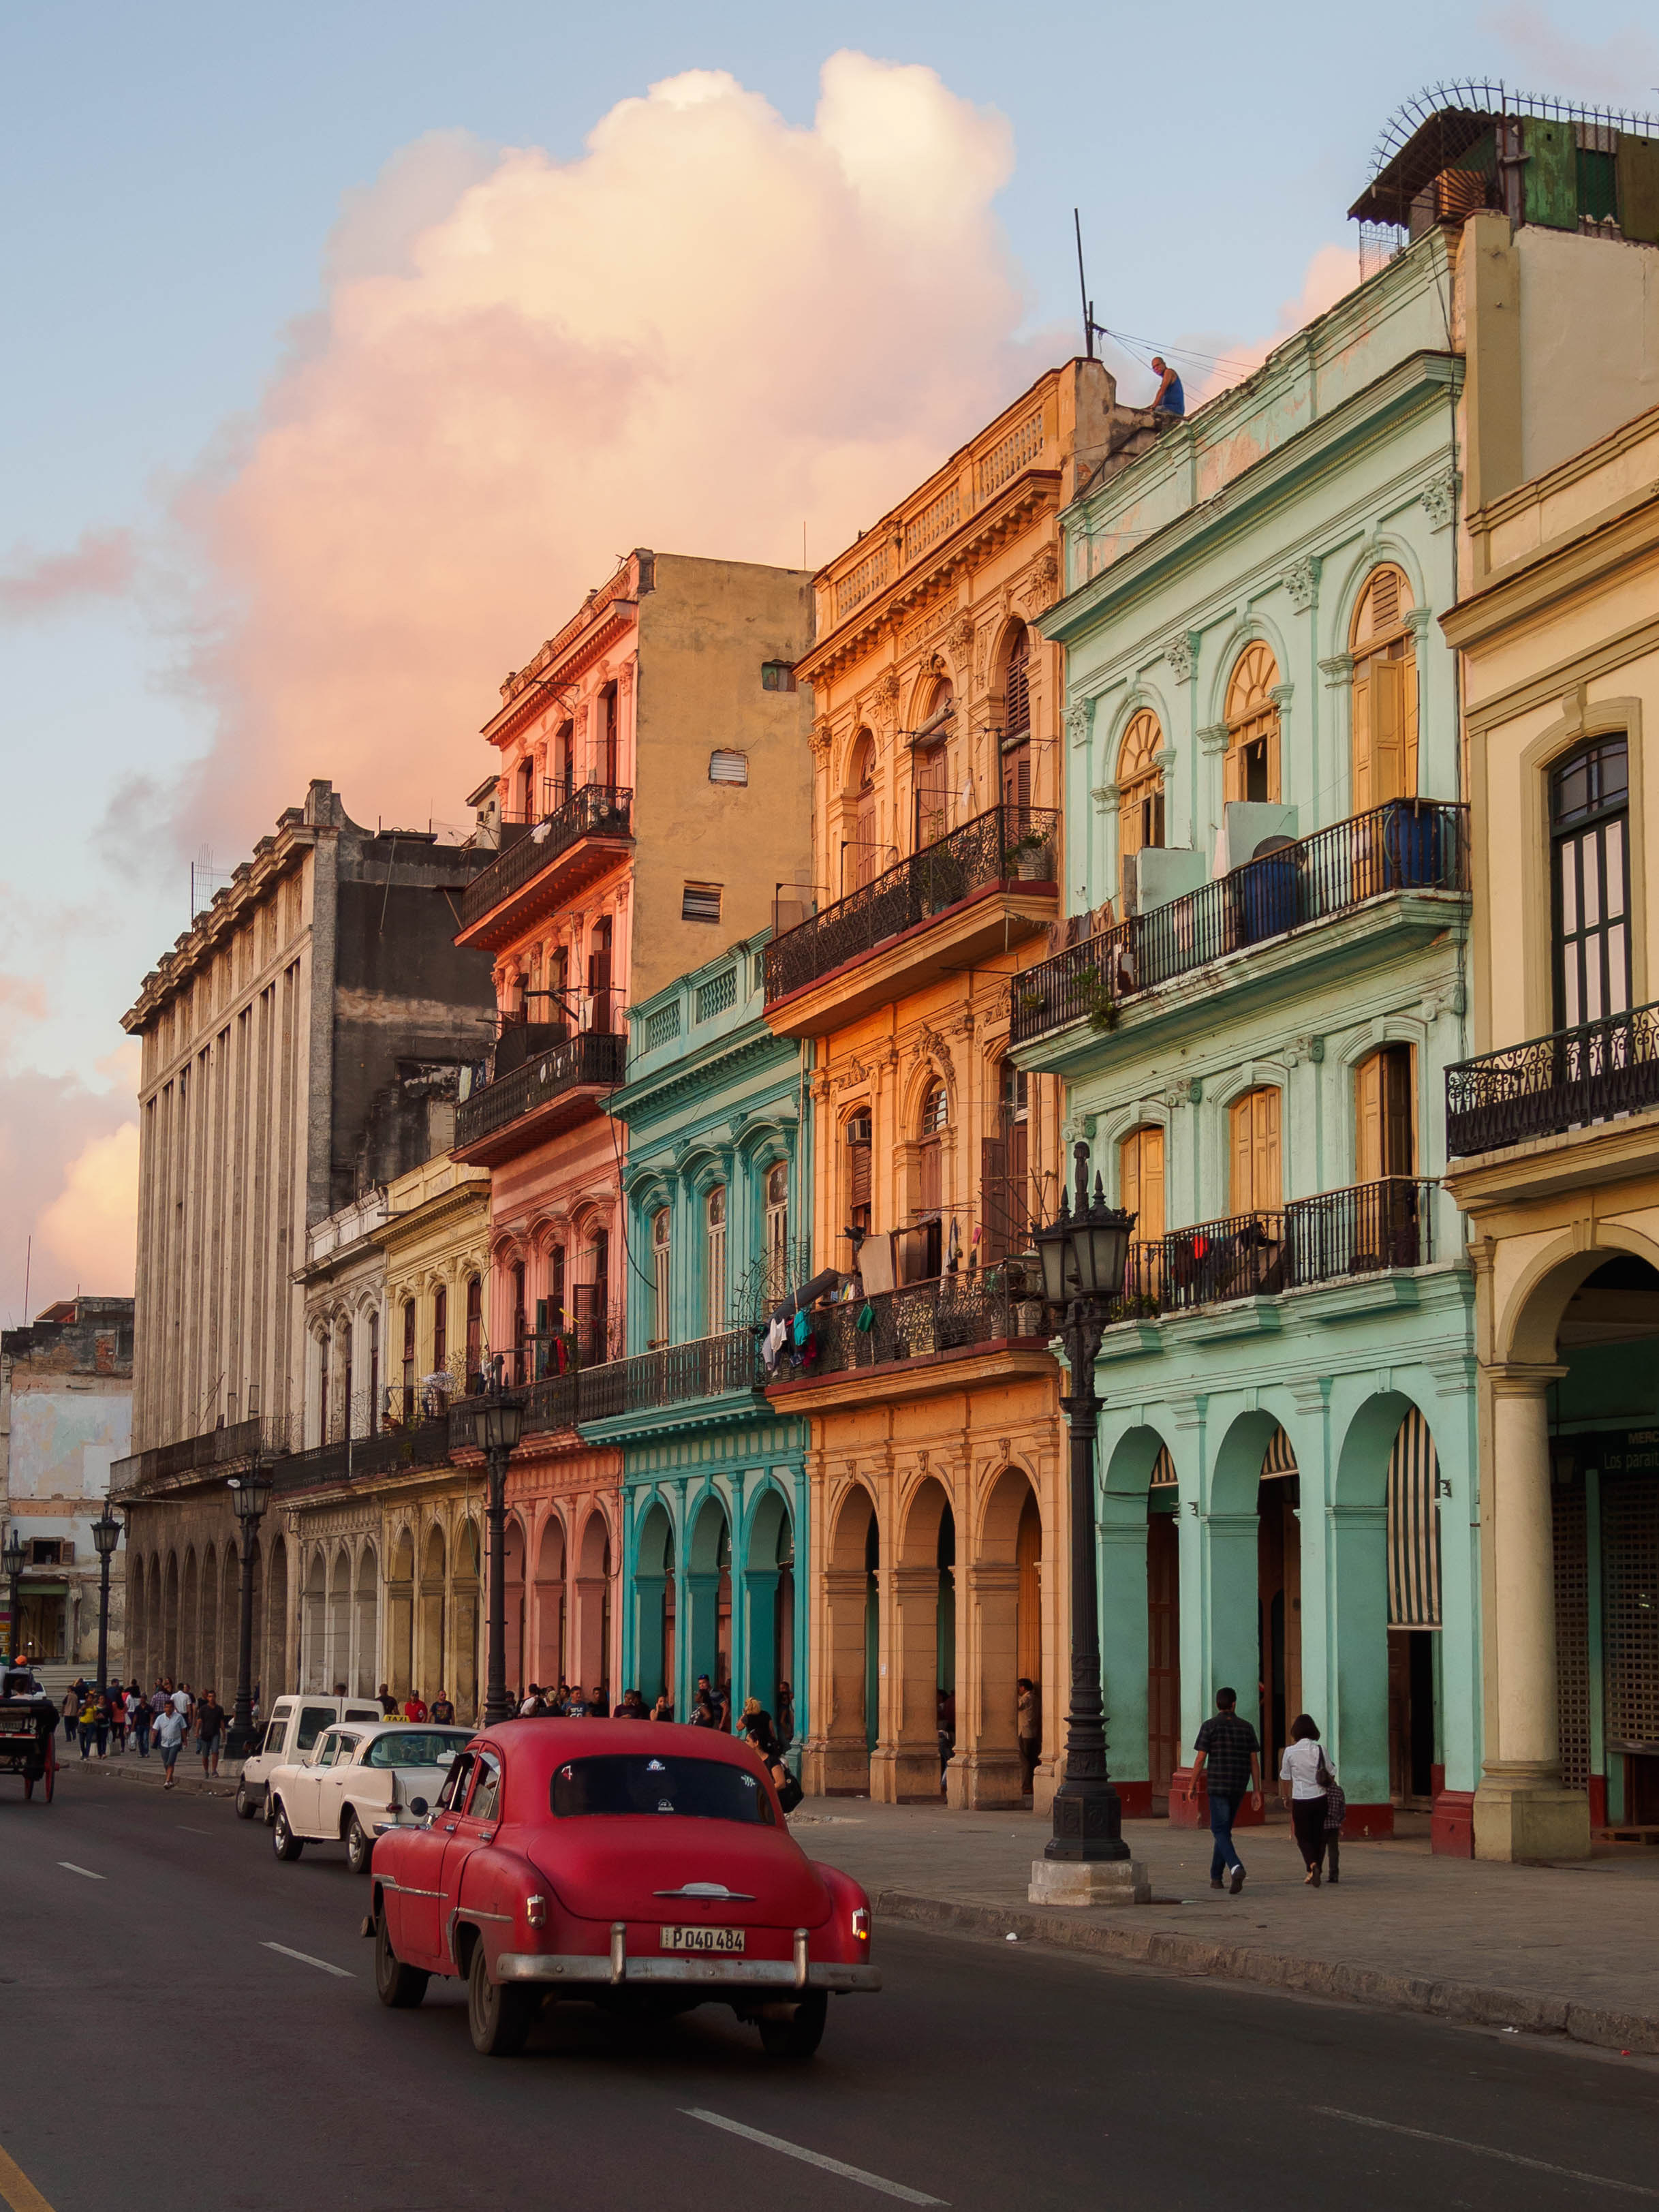 Colorful buildings and vintage cars in Havana, Cuba